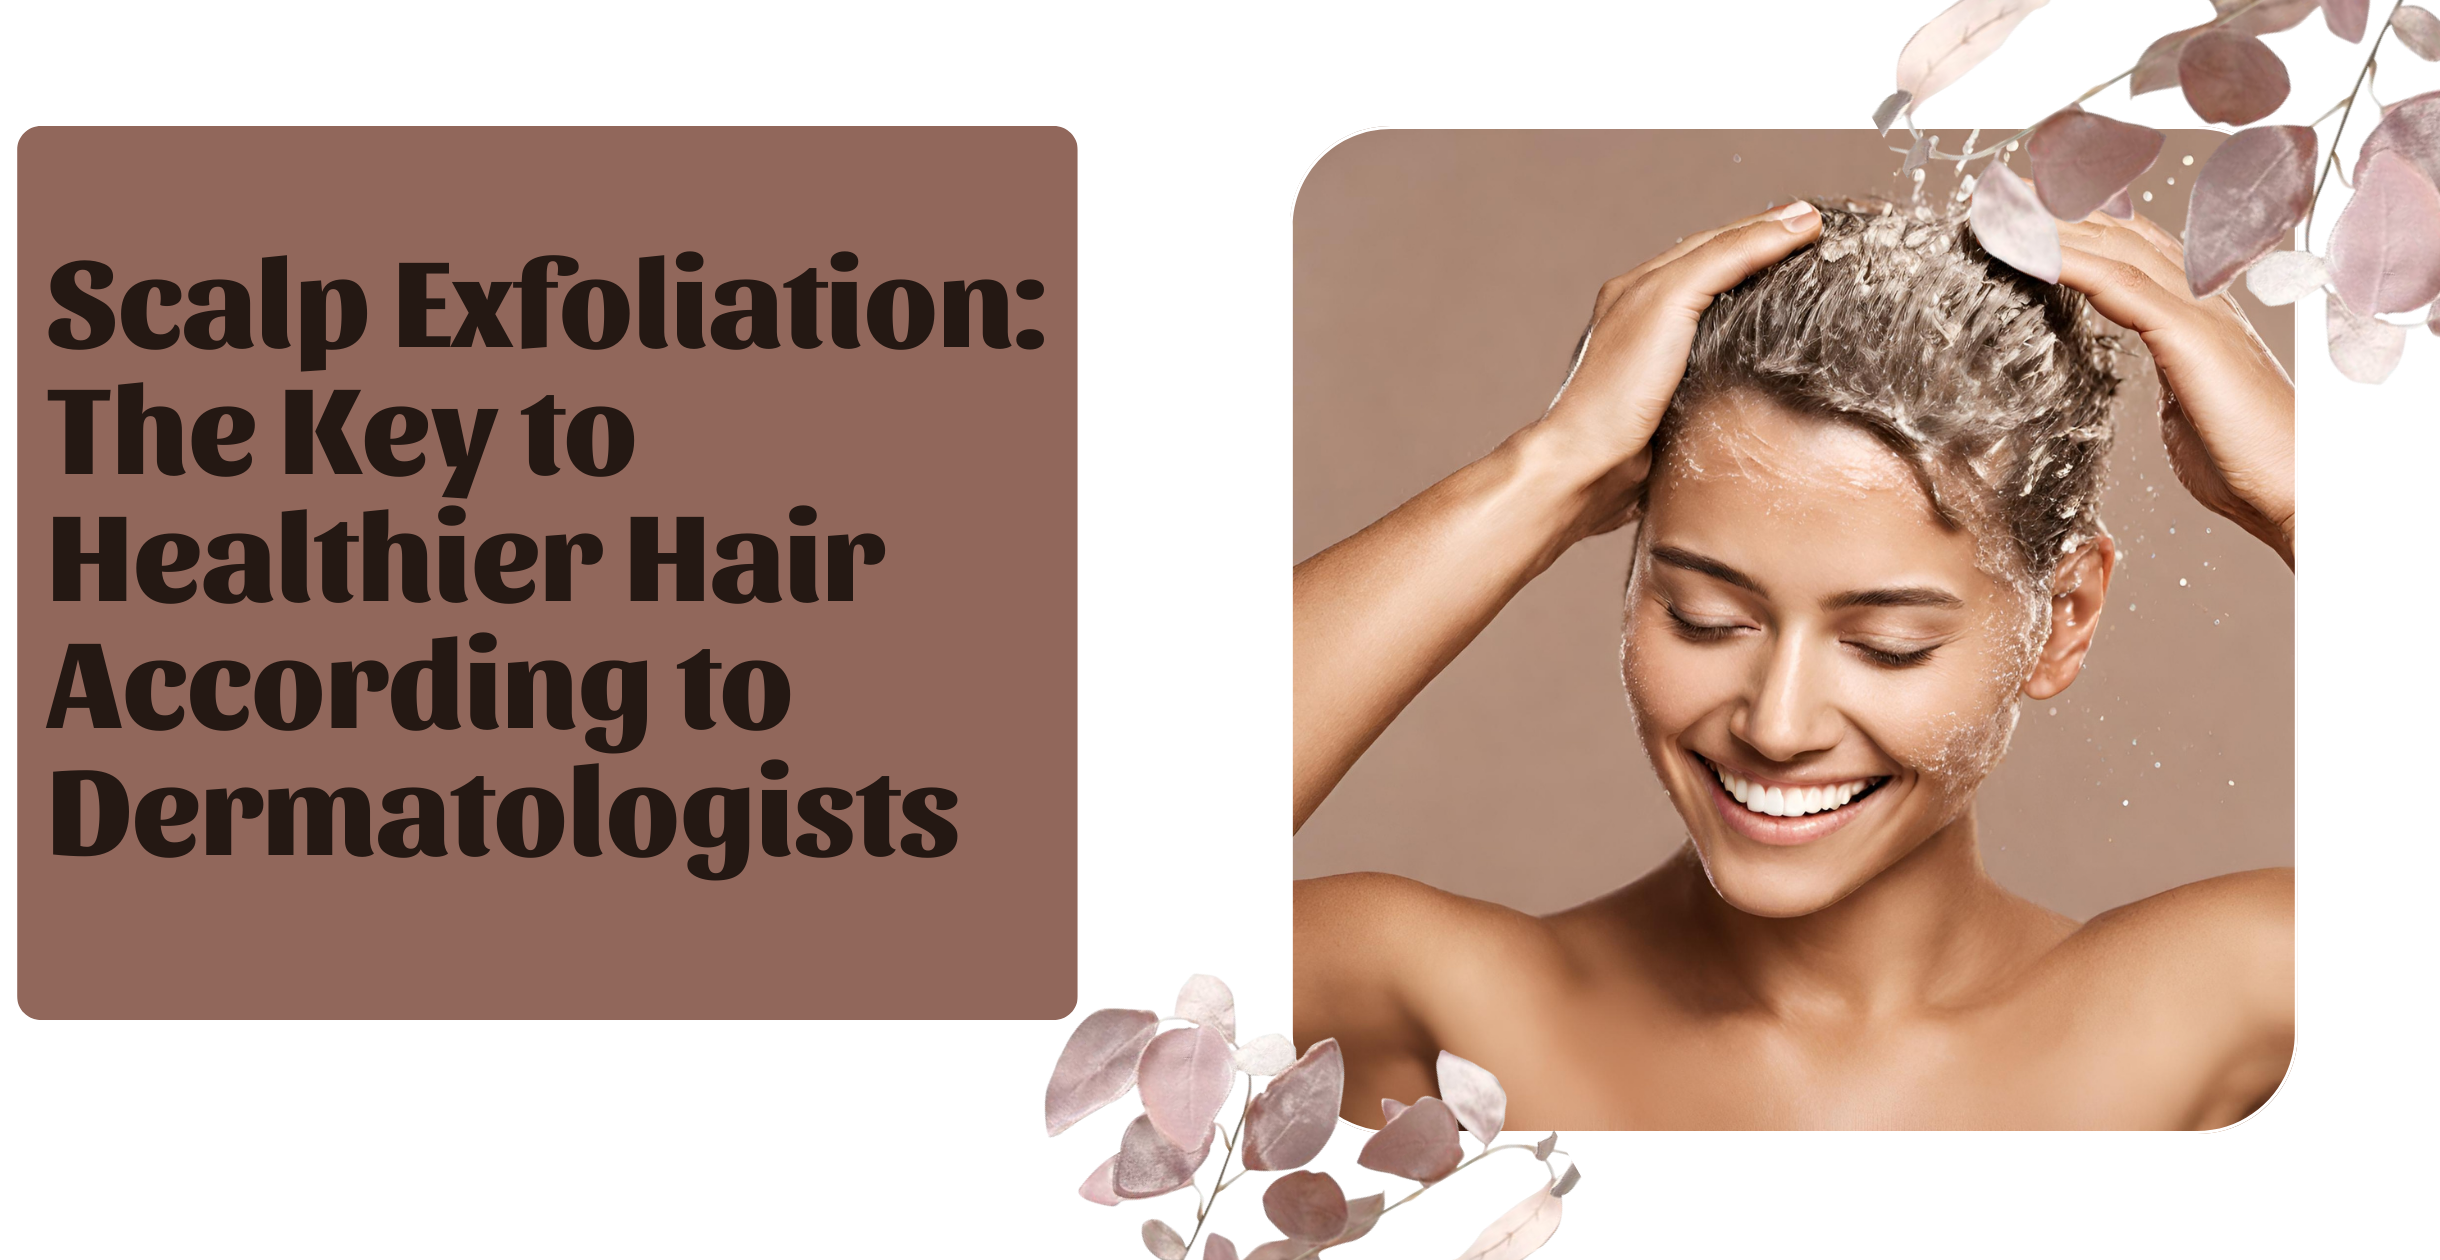 Scalp Exfoliation: The Key to Healthier Hair According to Dermatologists